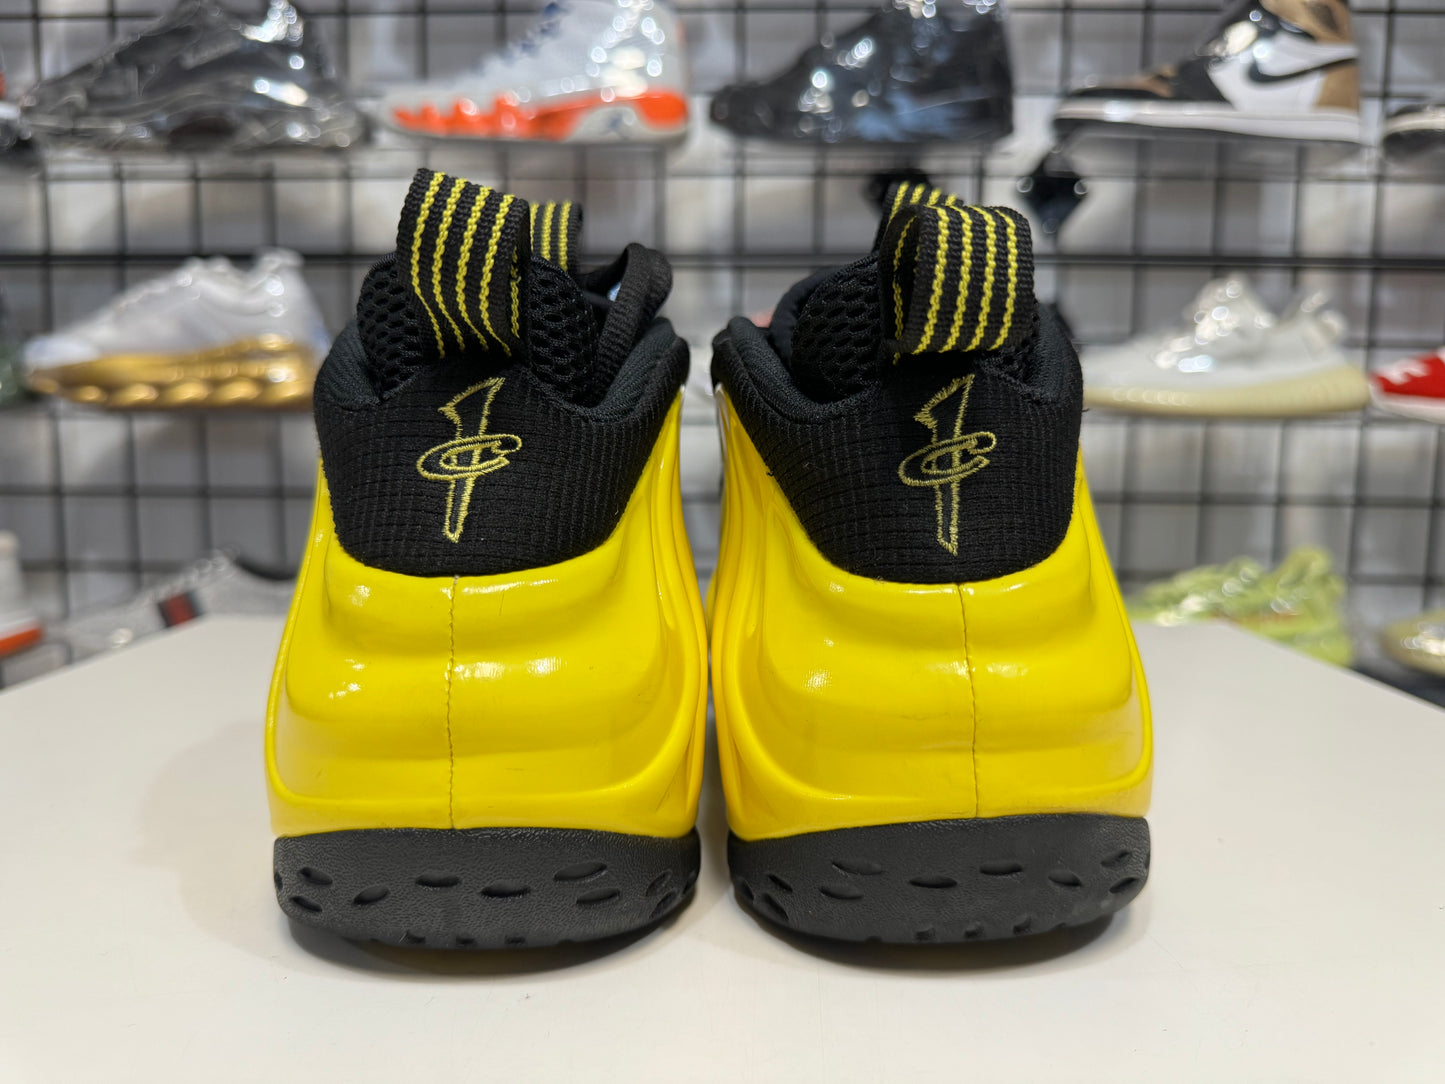 Nike Foamposite Wu-Tang size 9.5